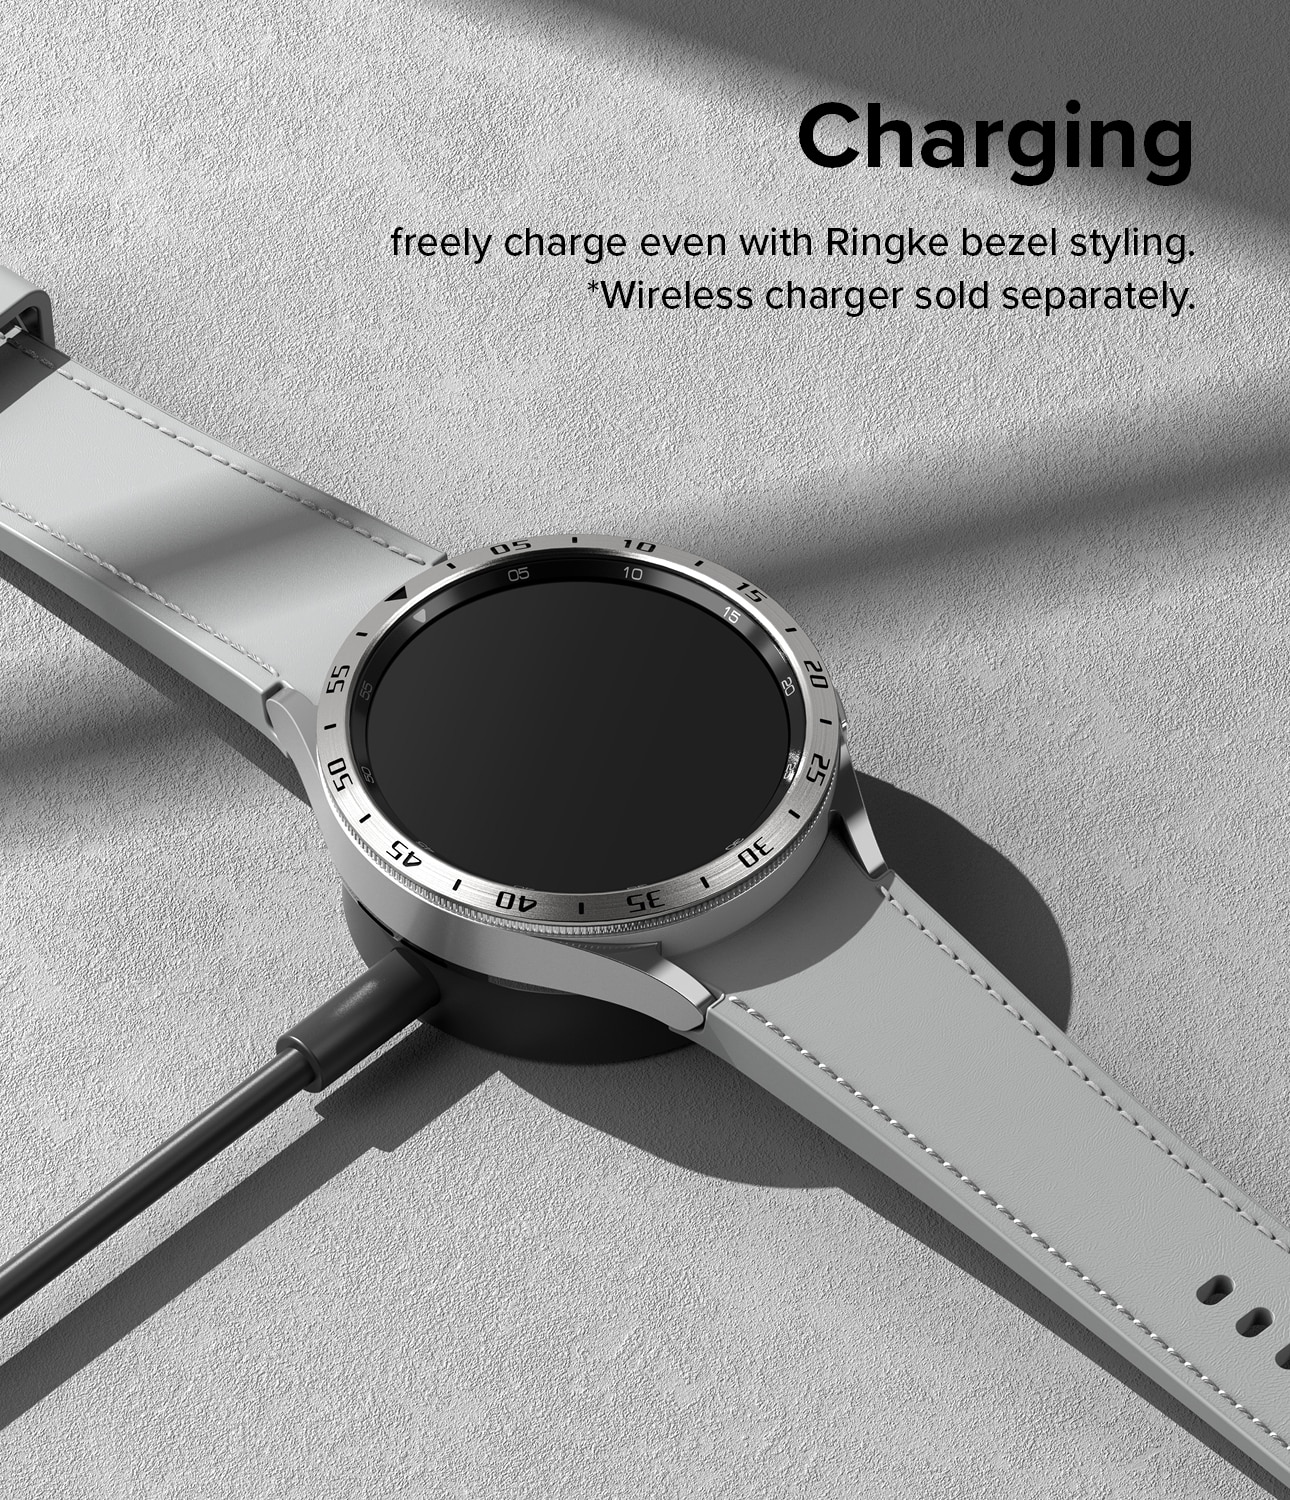 Bezel Styling Samsung Galaxy Watch 6 Classic 47mm argento